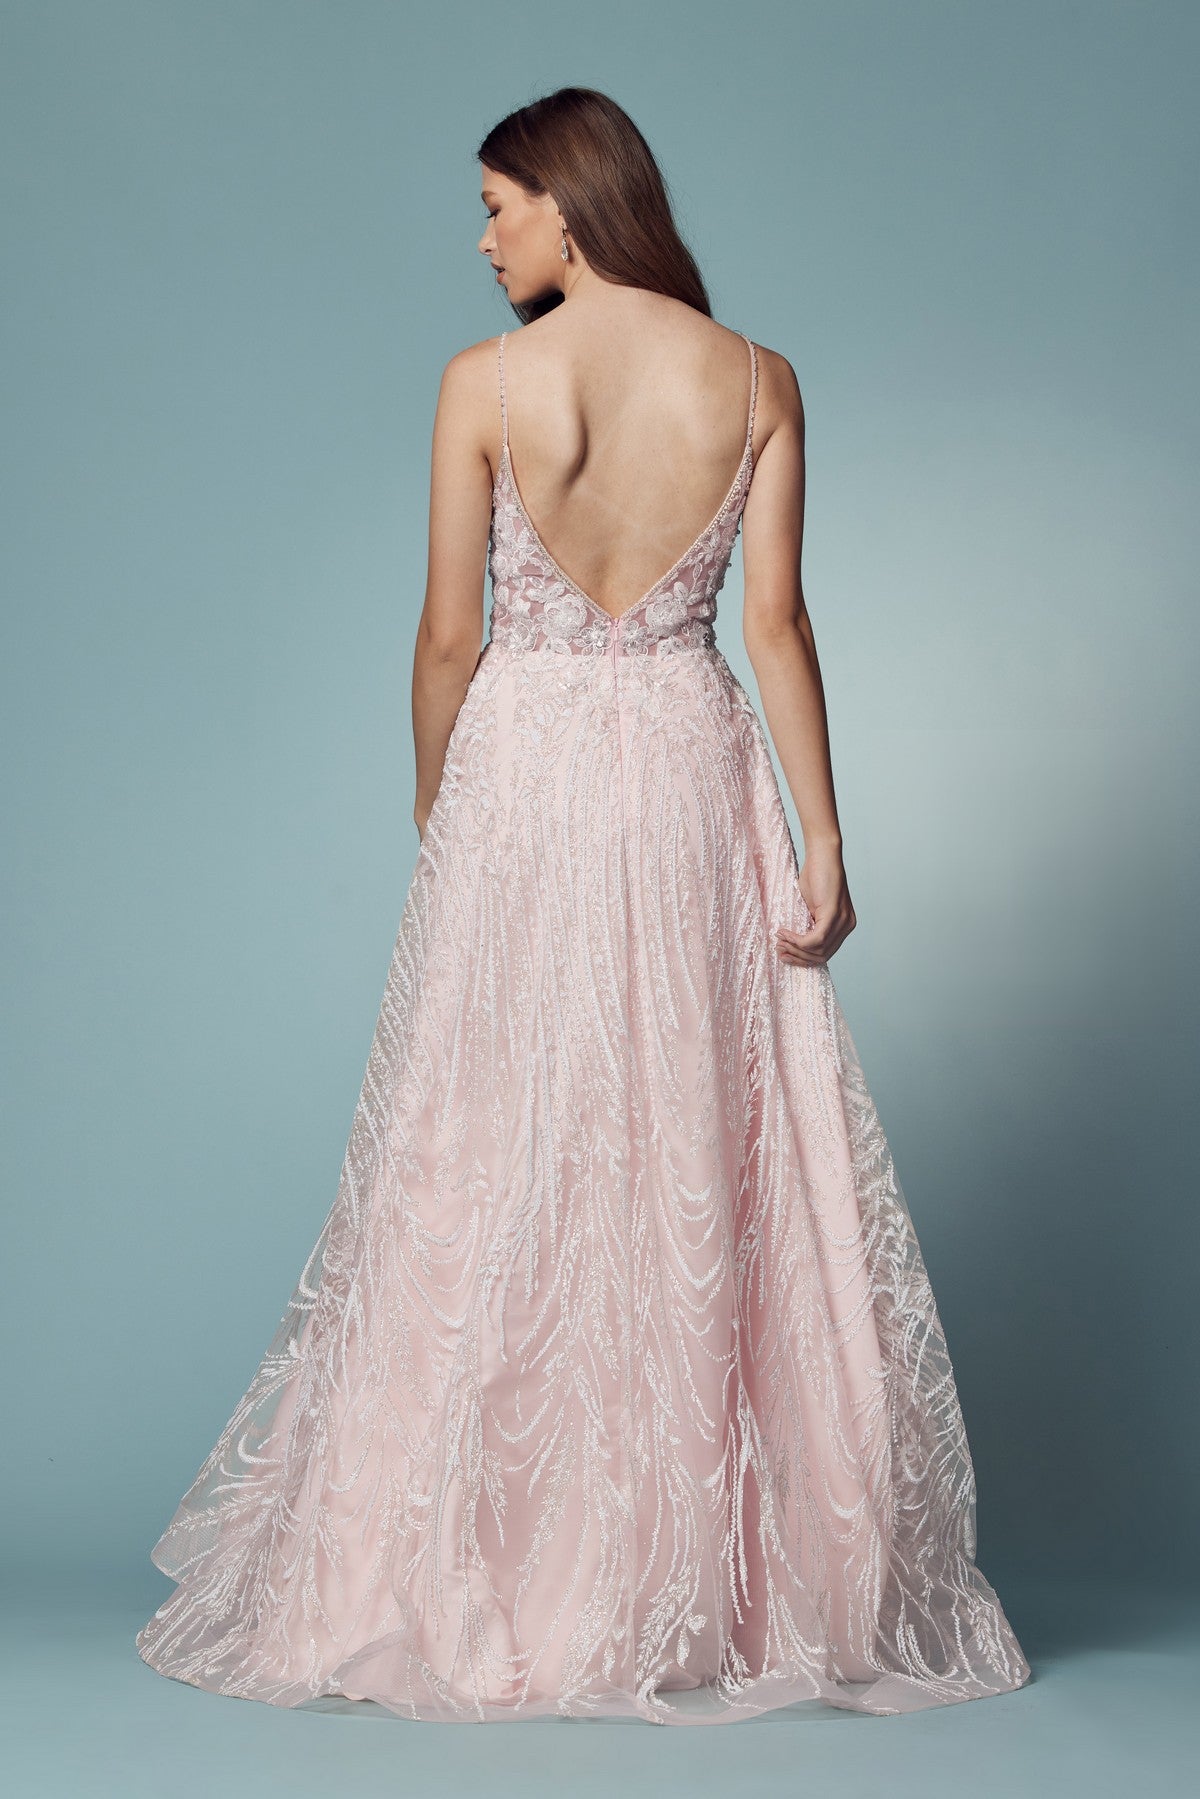 Embroidered Lace Illusion V-Neck A-Line Long Prom Dress NXT1009-Prom Dress-smcfashion.com